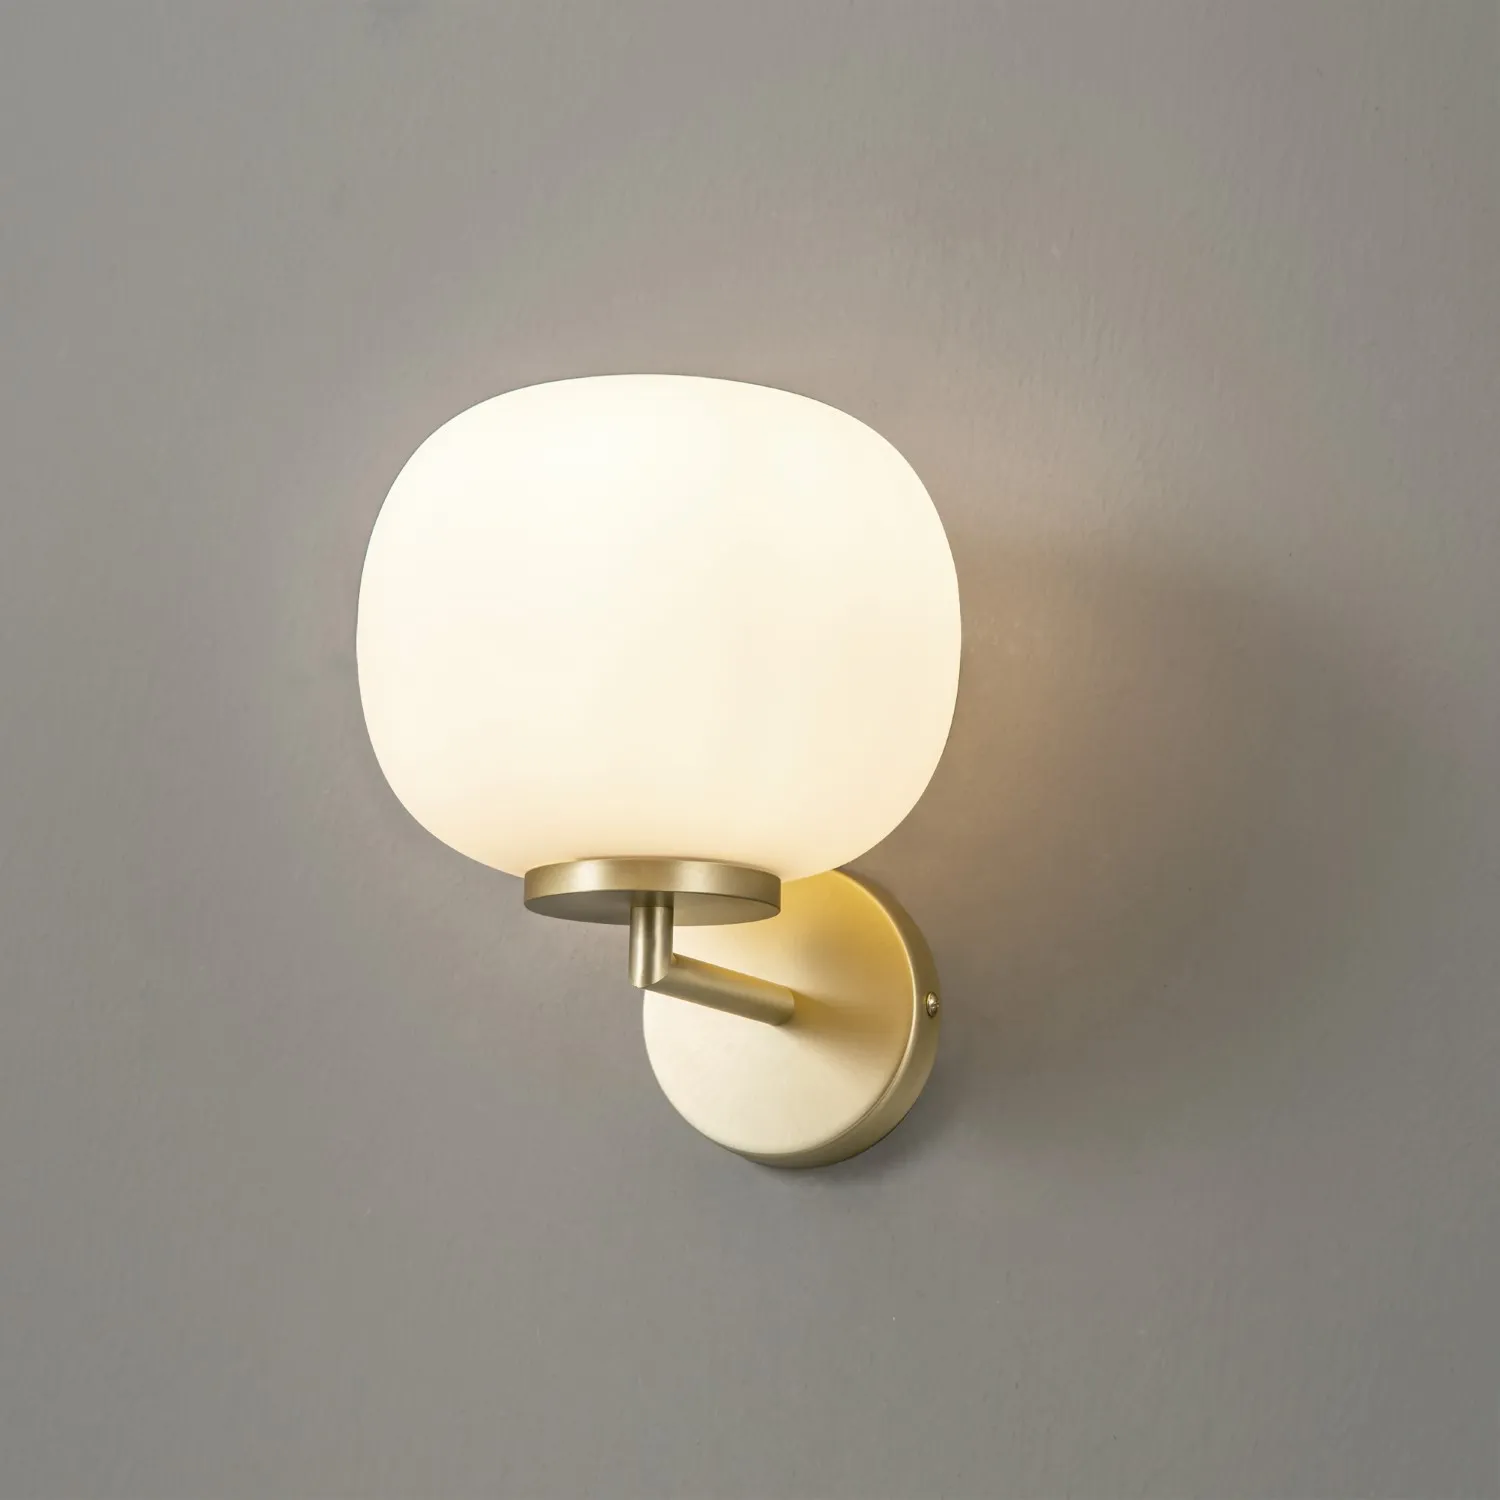 Sevenoaks Small Oval Ball Wall Light 1 Light E27 Satin Gold Base With Frosted White Glass Globe